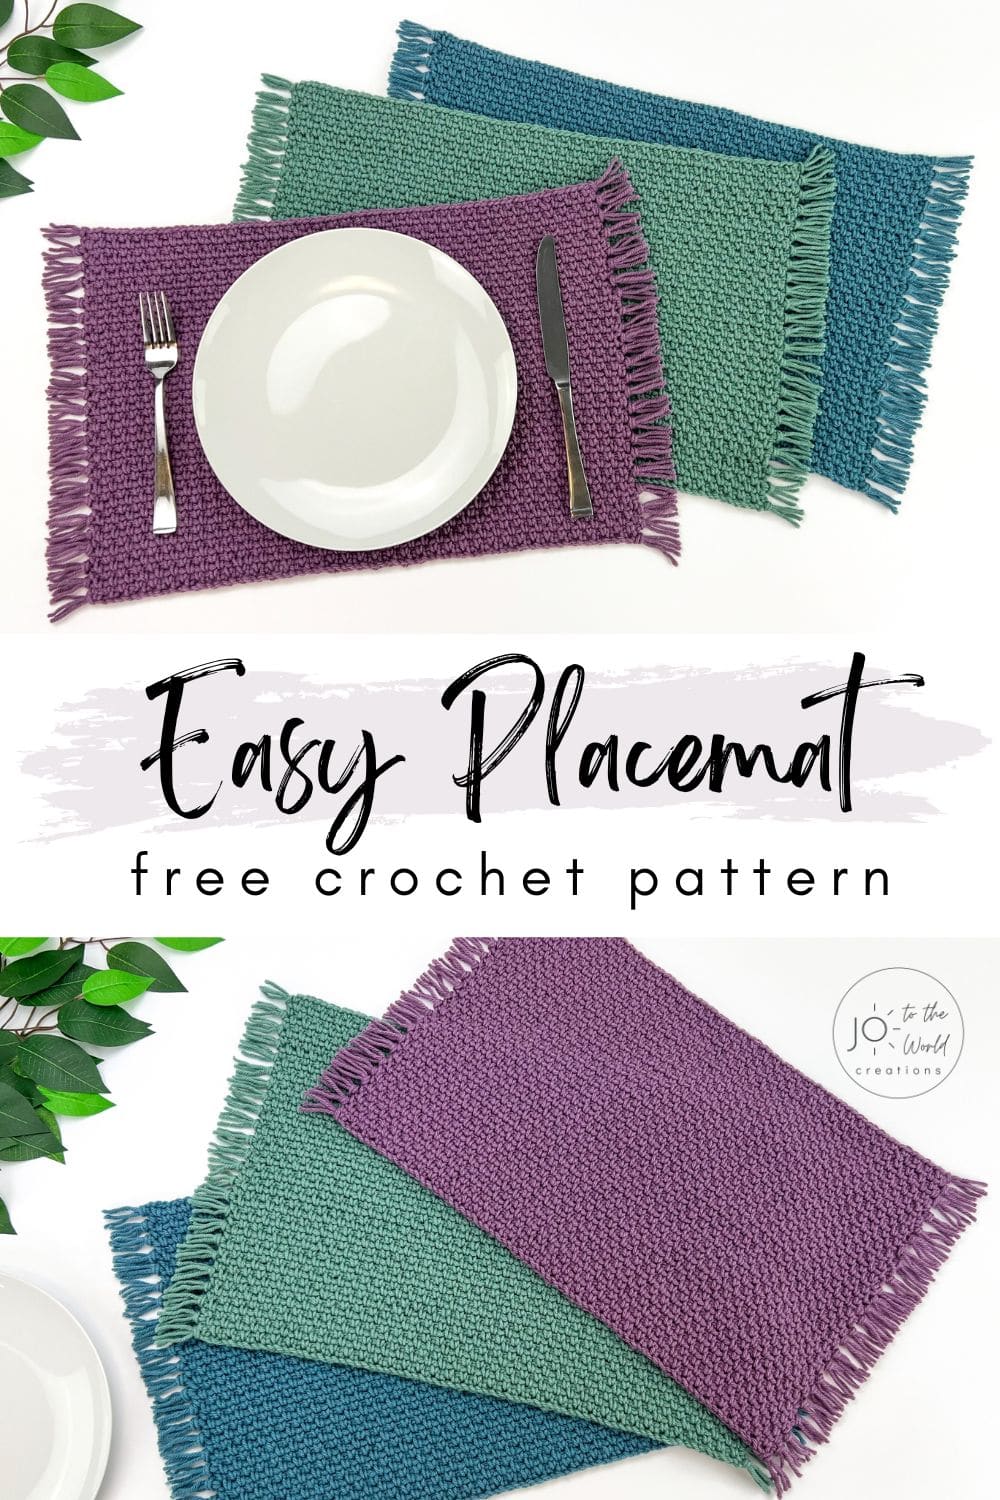 Free crochet placemat pattern